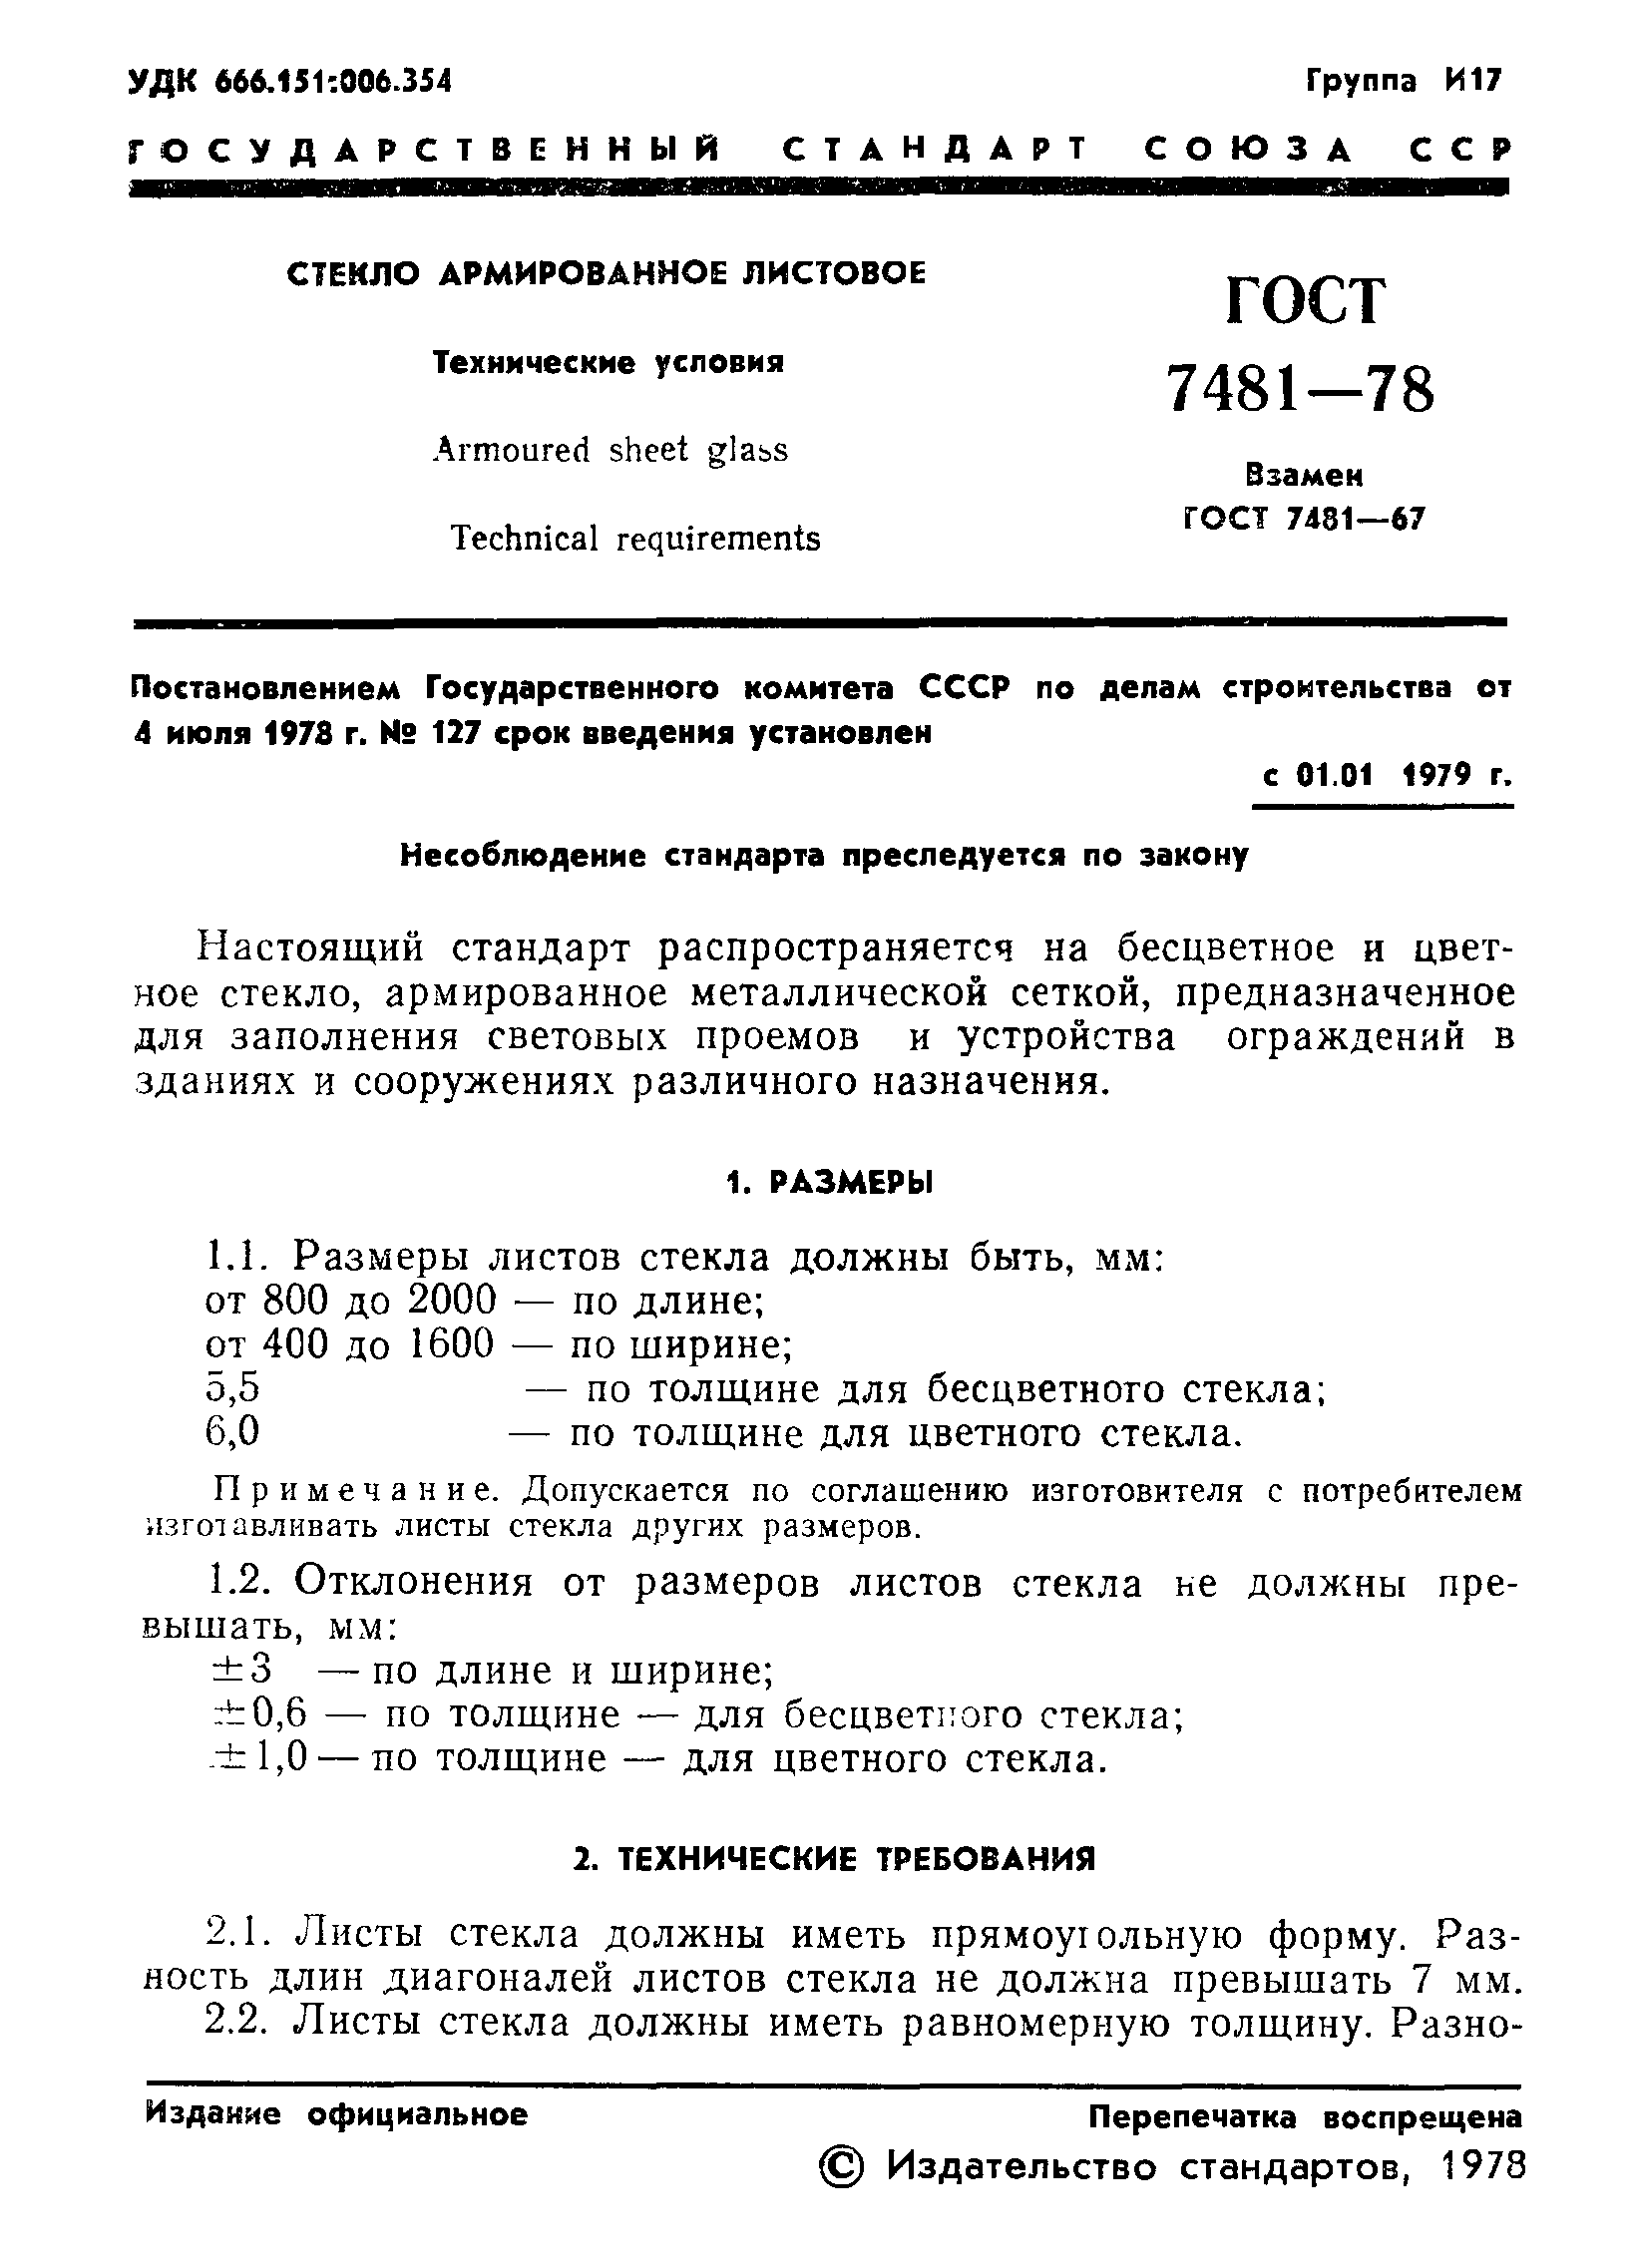 ГОСТ 7481-78